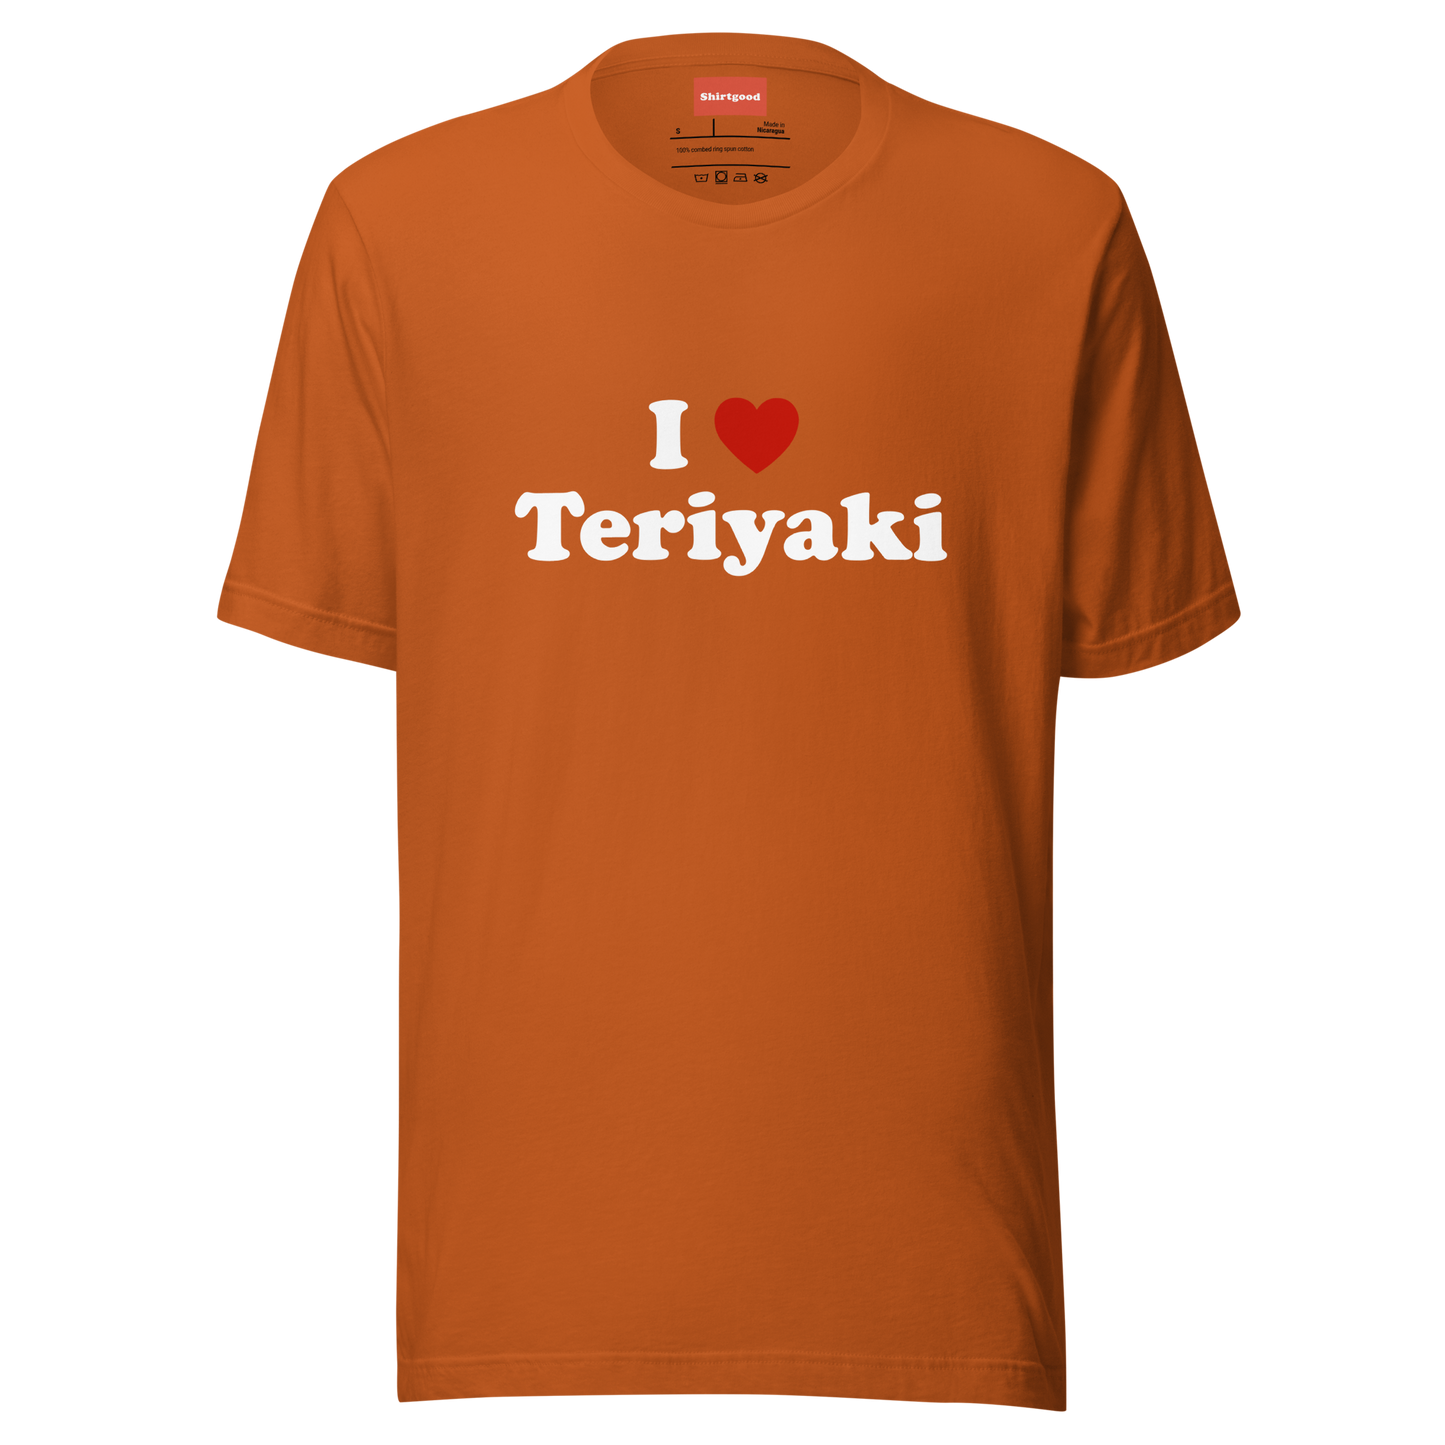 I heart Teriyaki! Dark colors